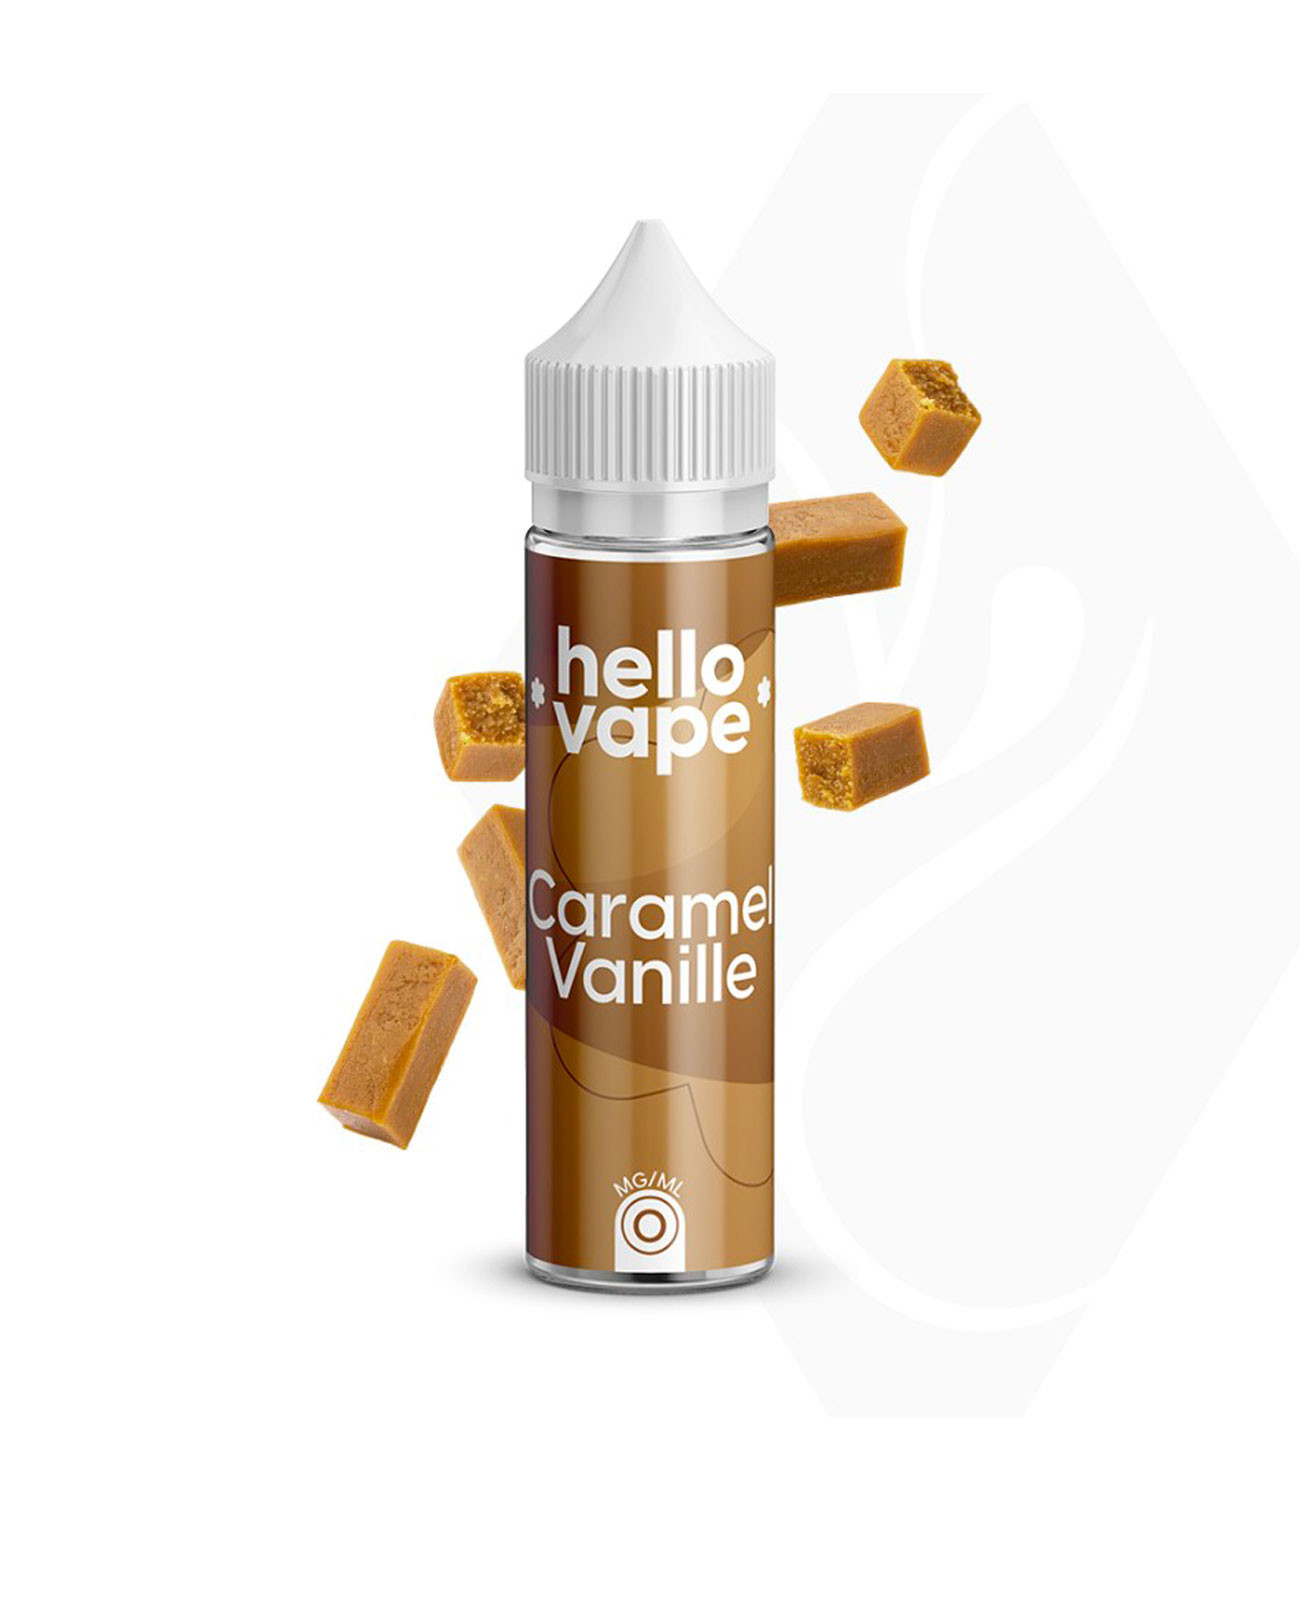 E-liquide Hello Vape Caramel Vanille gourmand et pas cher